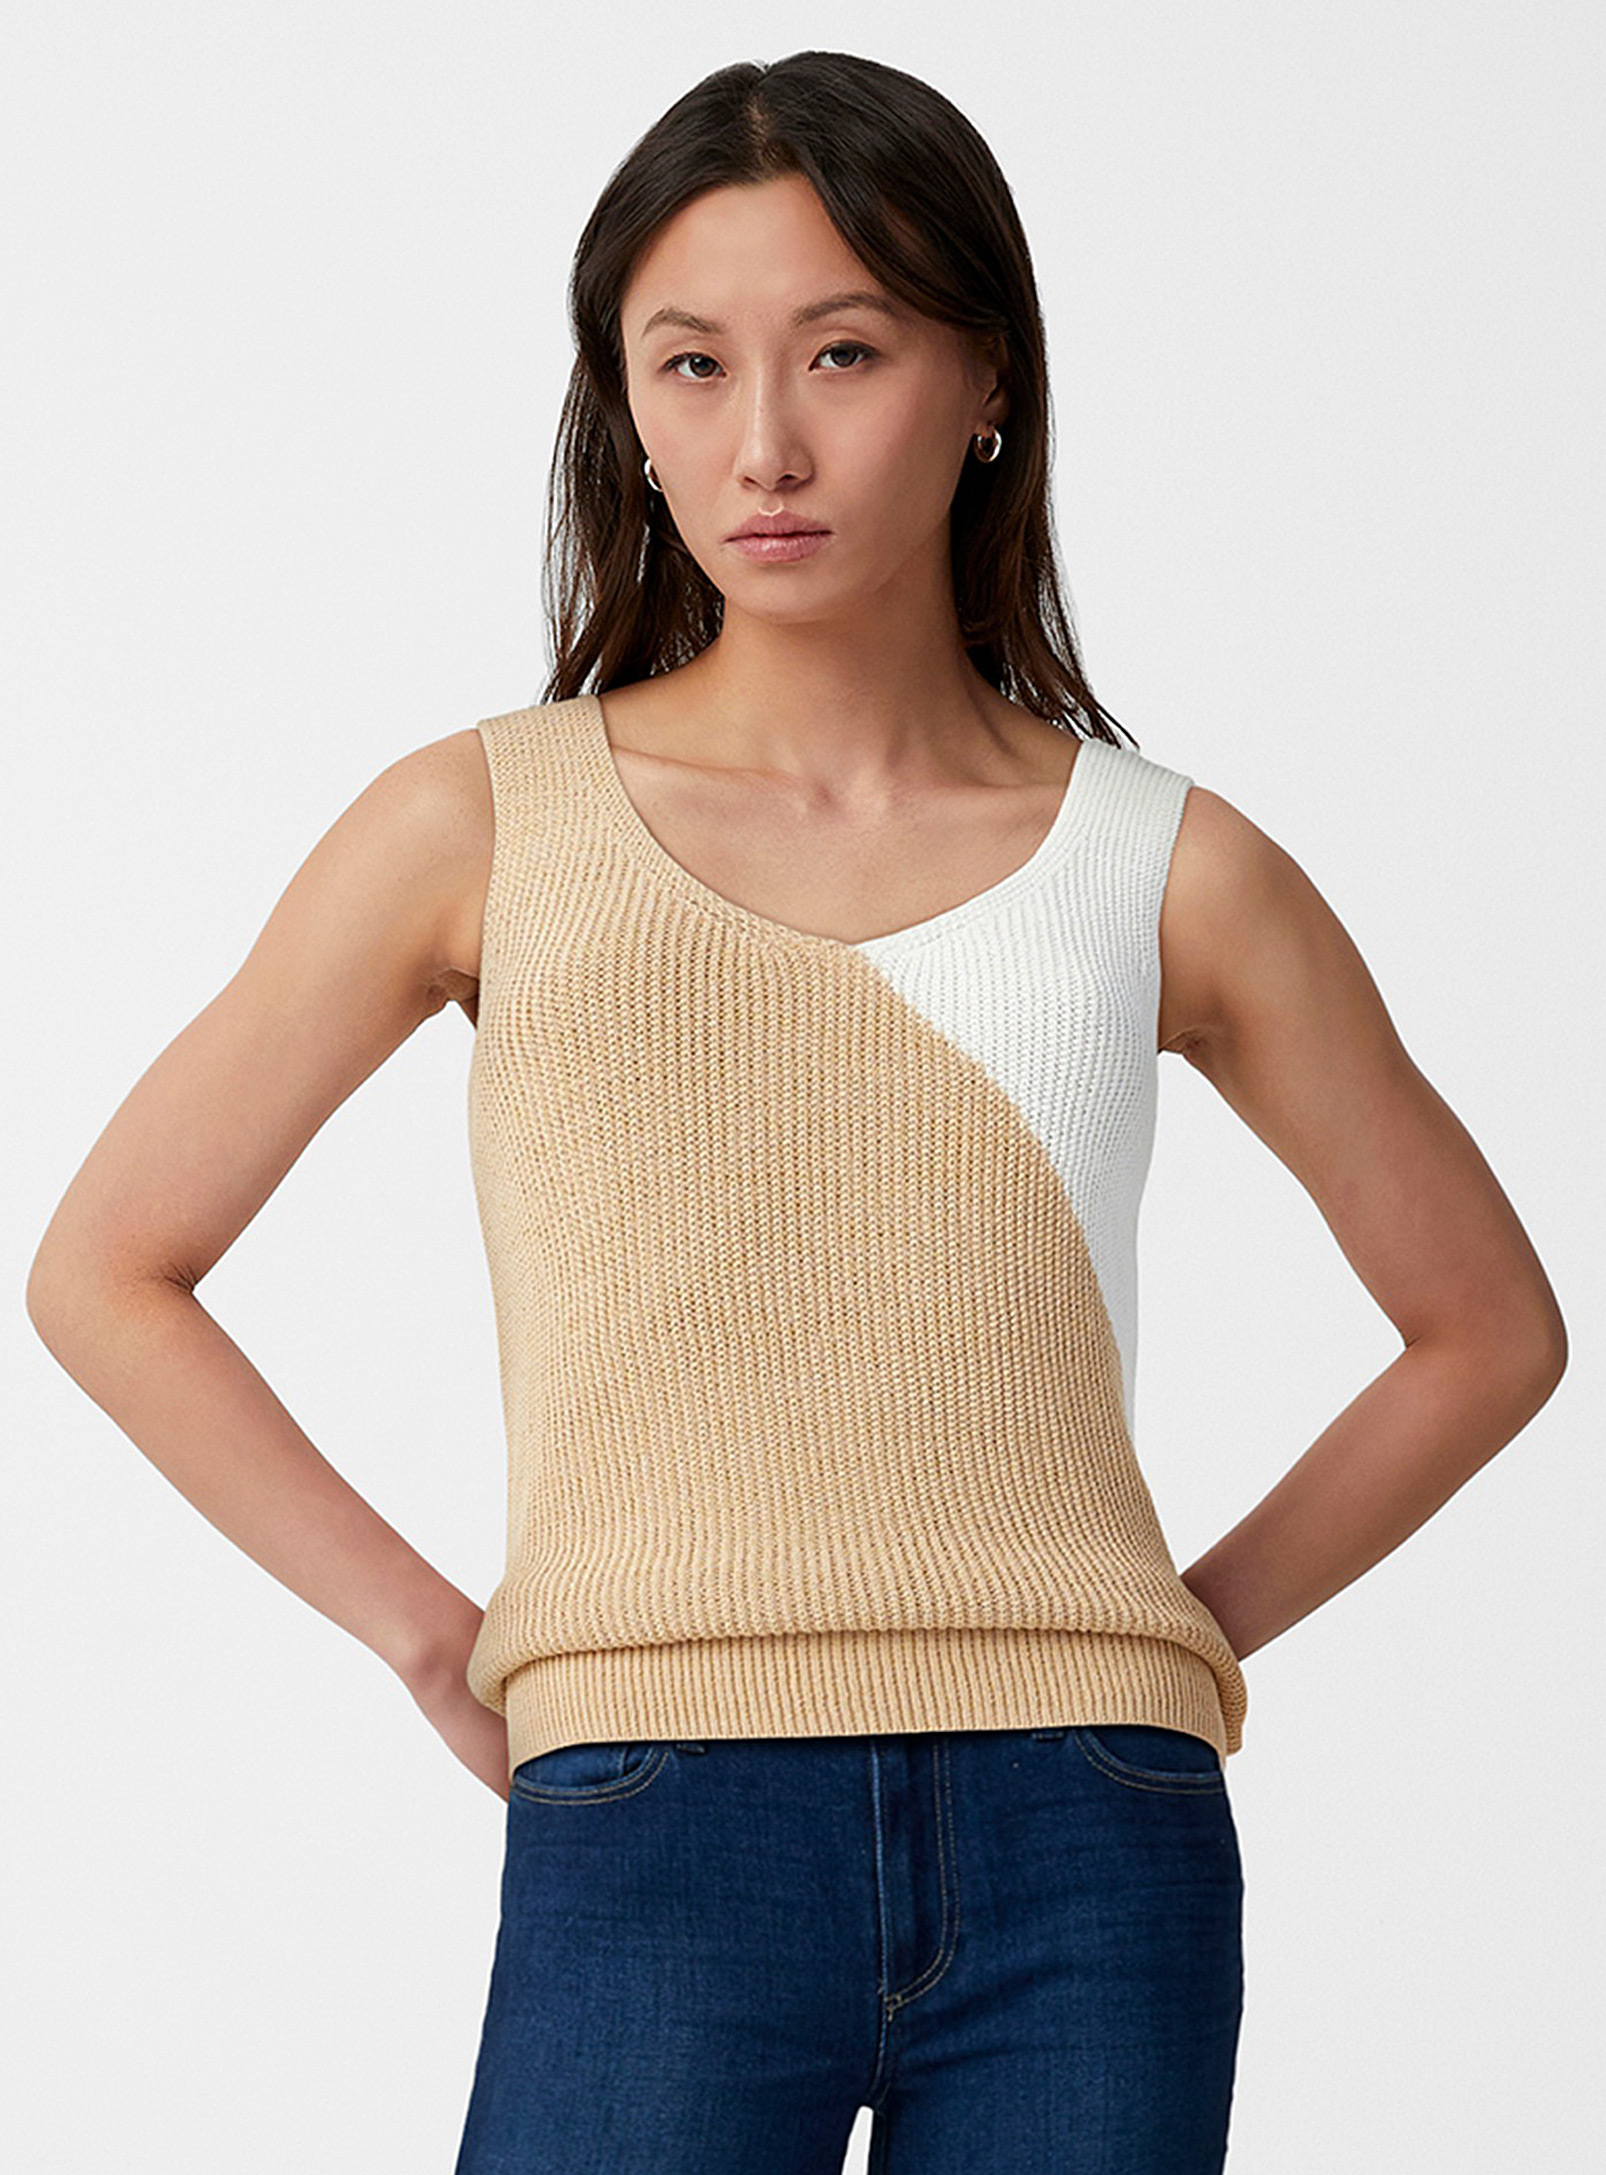 Contemporaine - La camisole tricot blocs bicolores